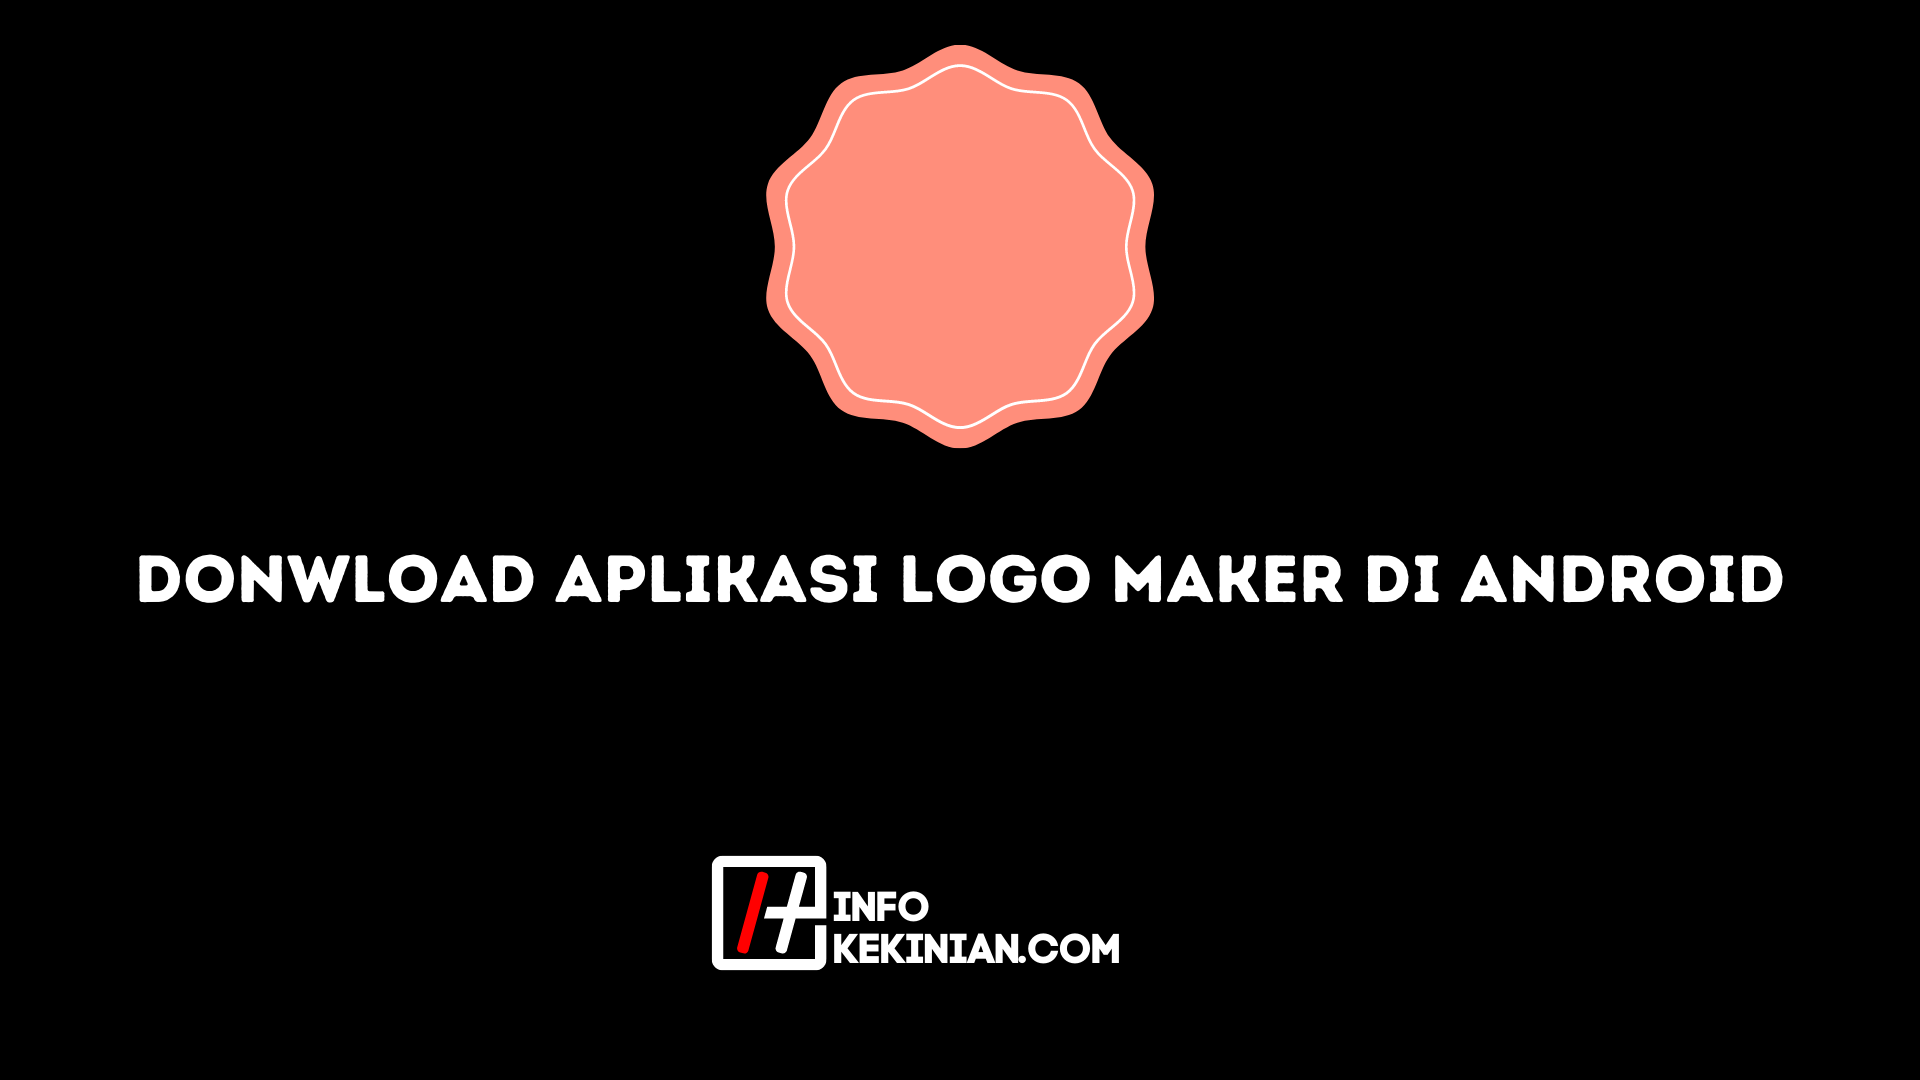 donwload aplikasi logo maker di android